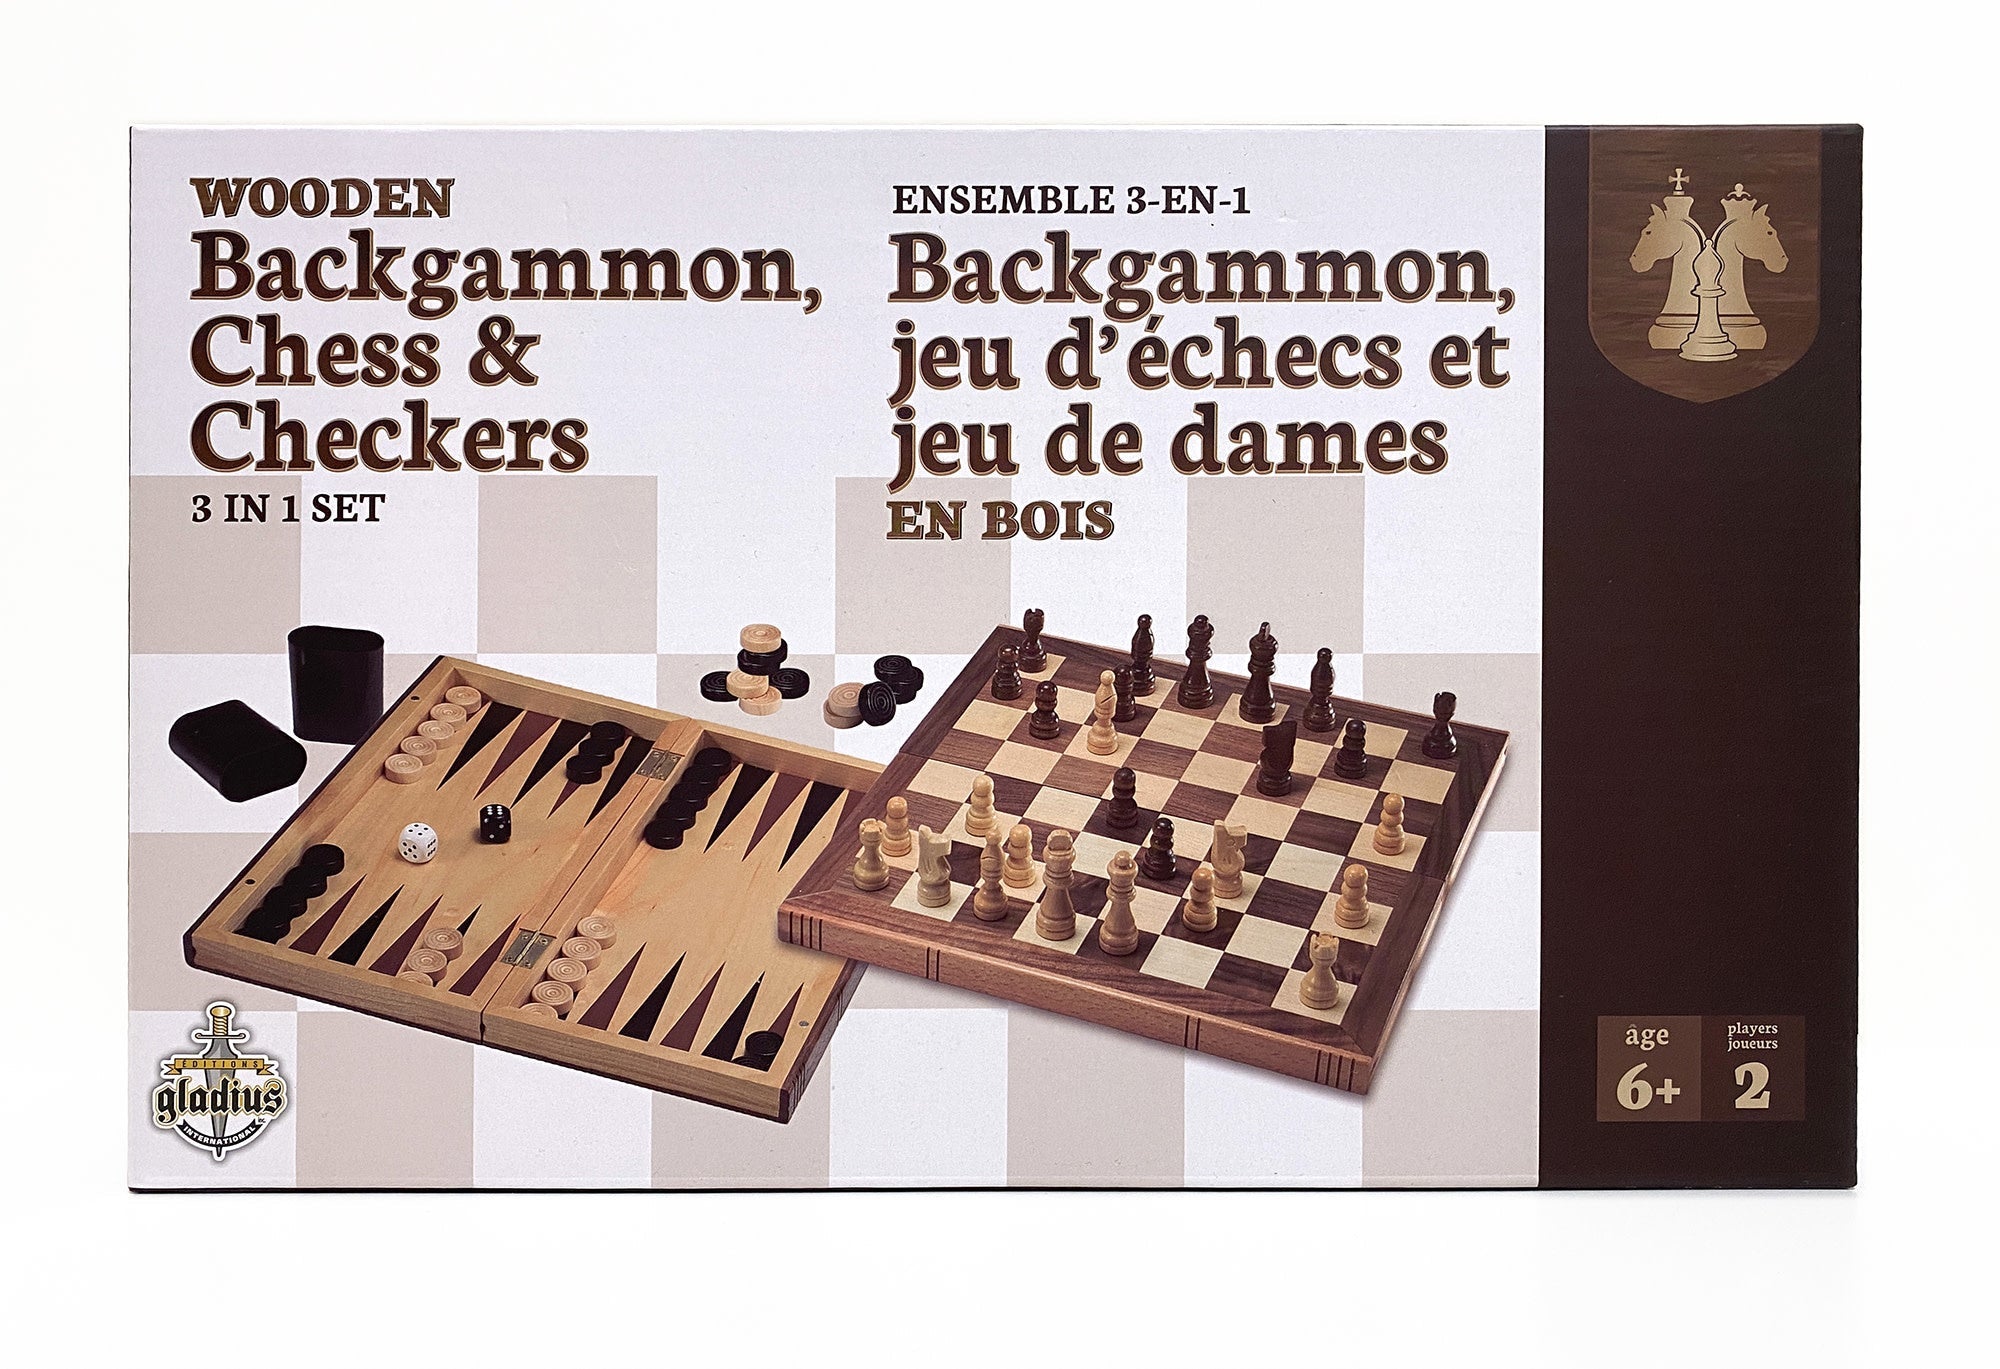 Ensemble 3-1 Backgammon Echecs Et Dame - Party Shop